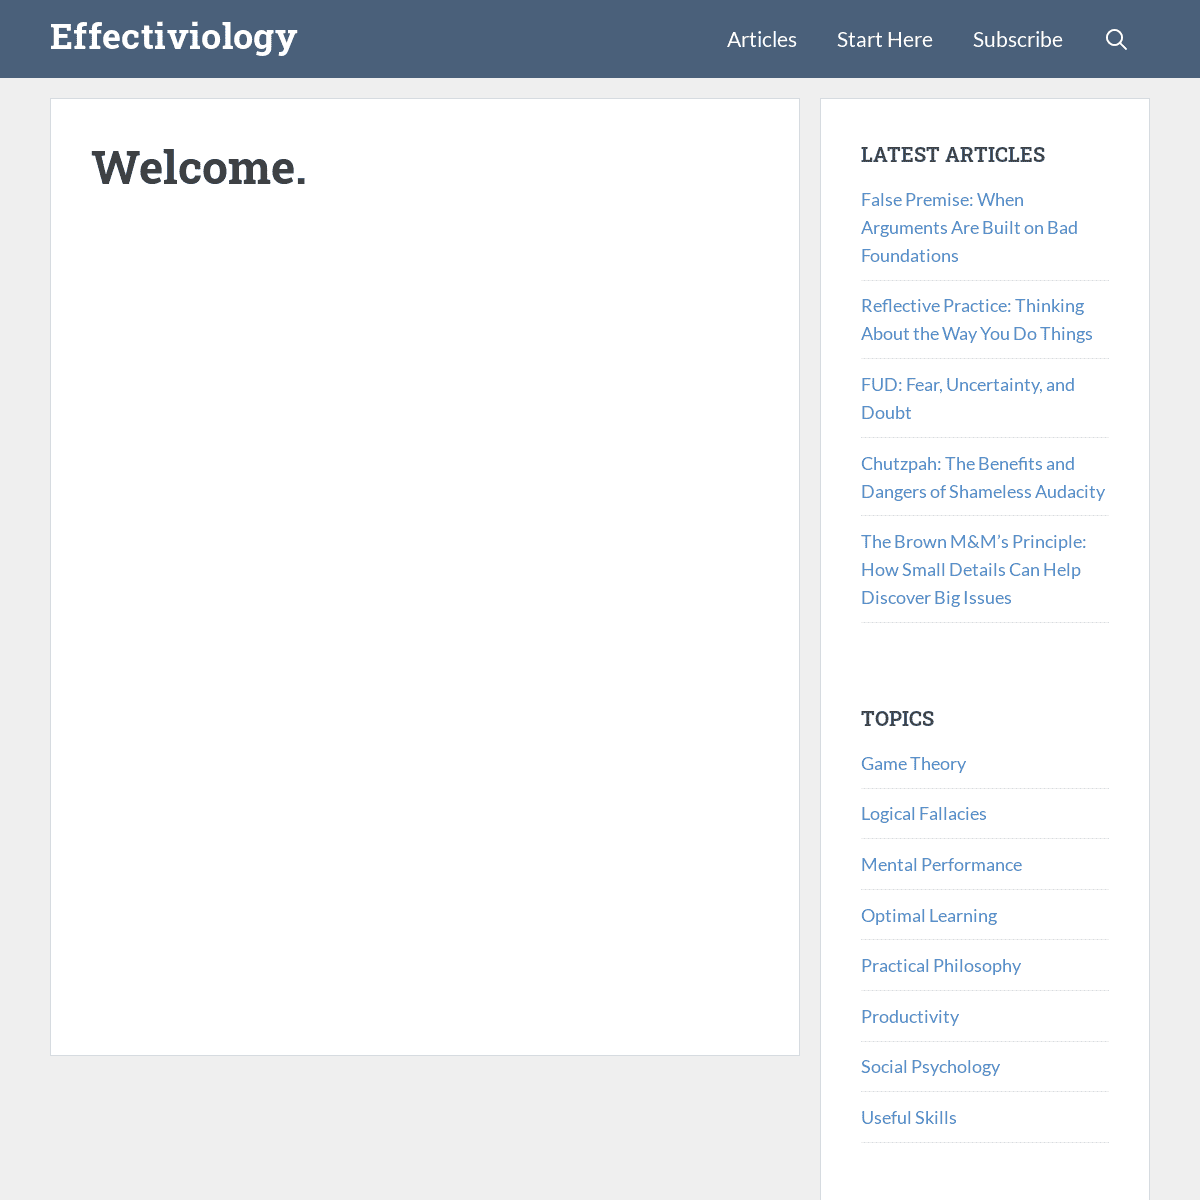 A complete backup of https://effectiviology.com